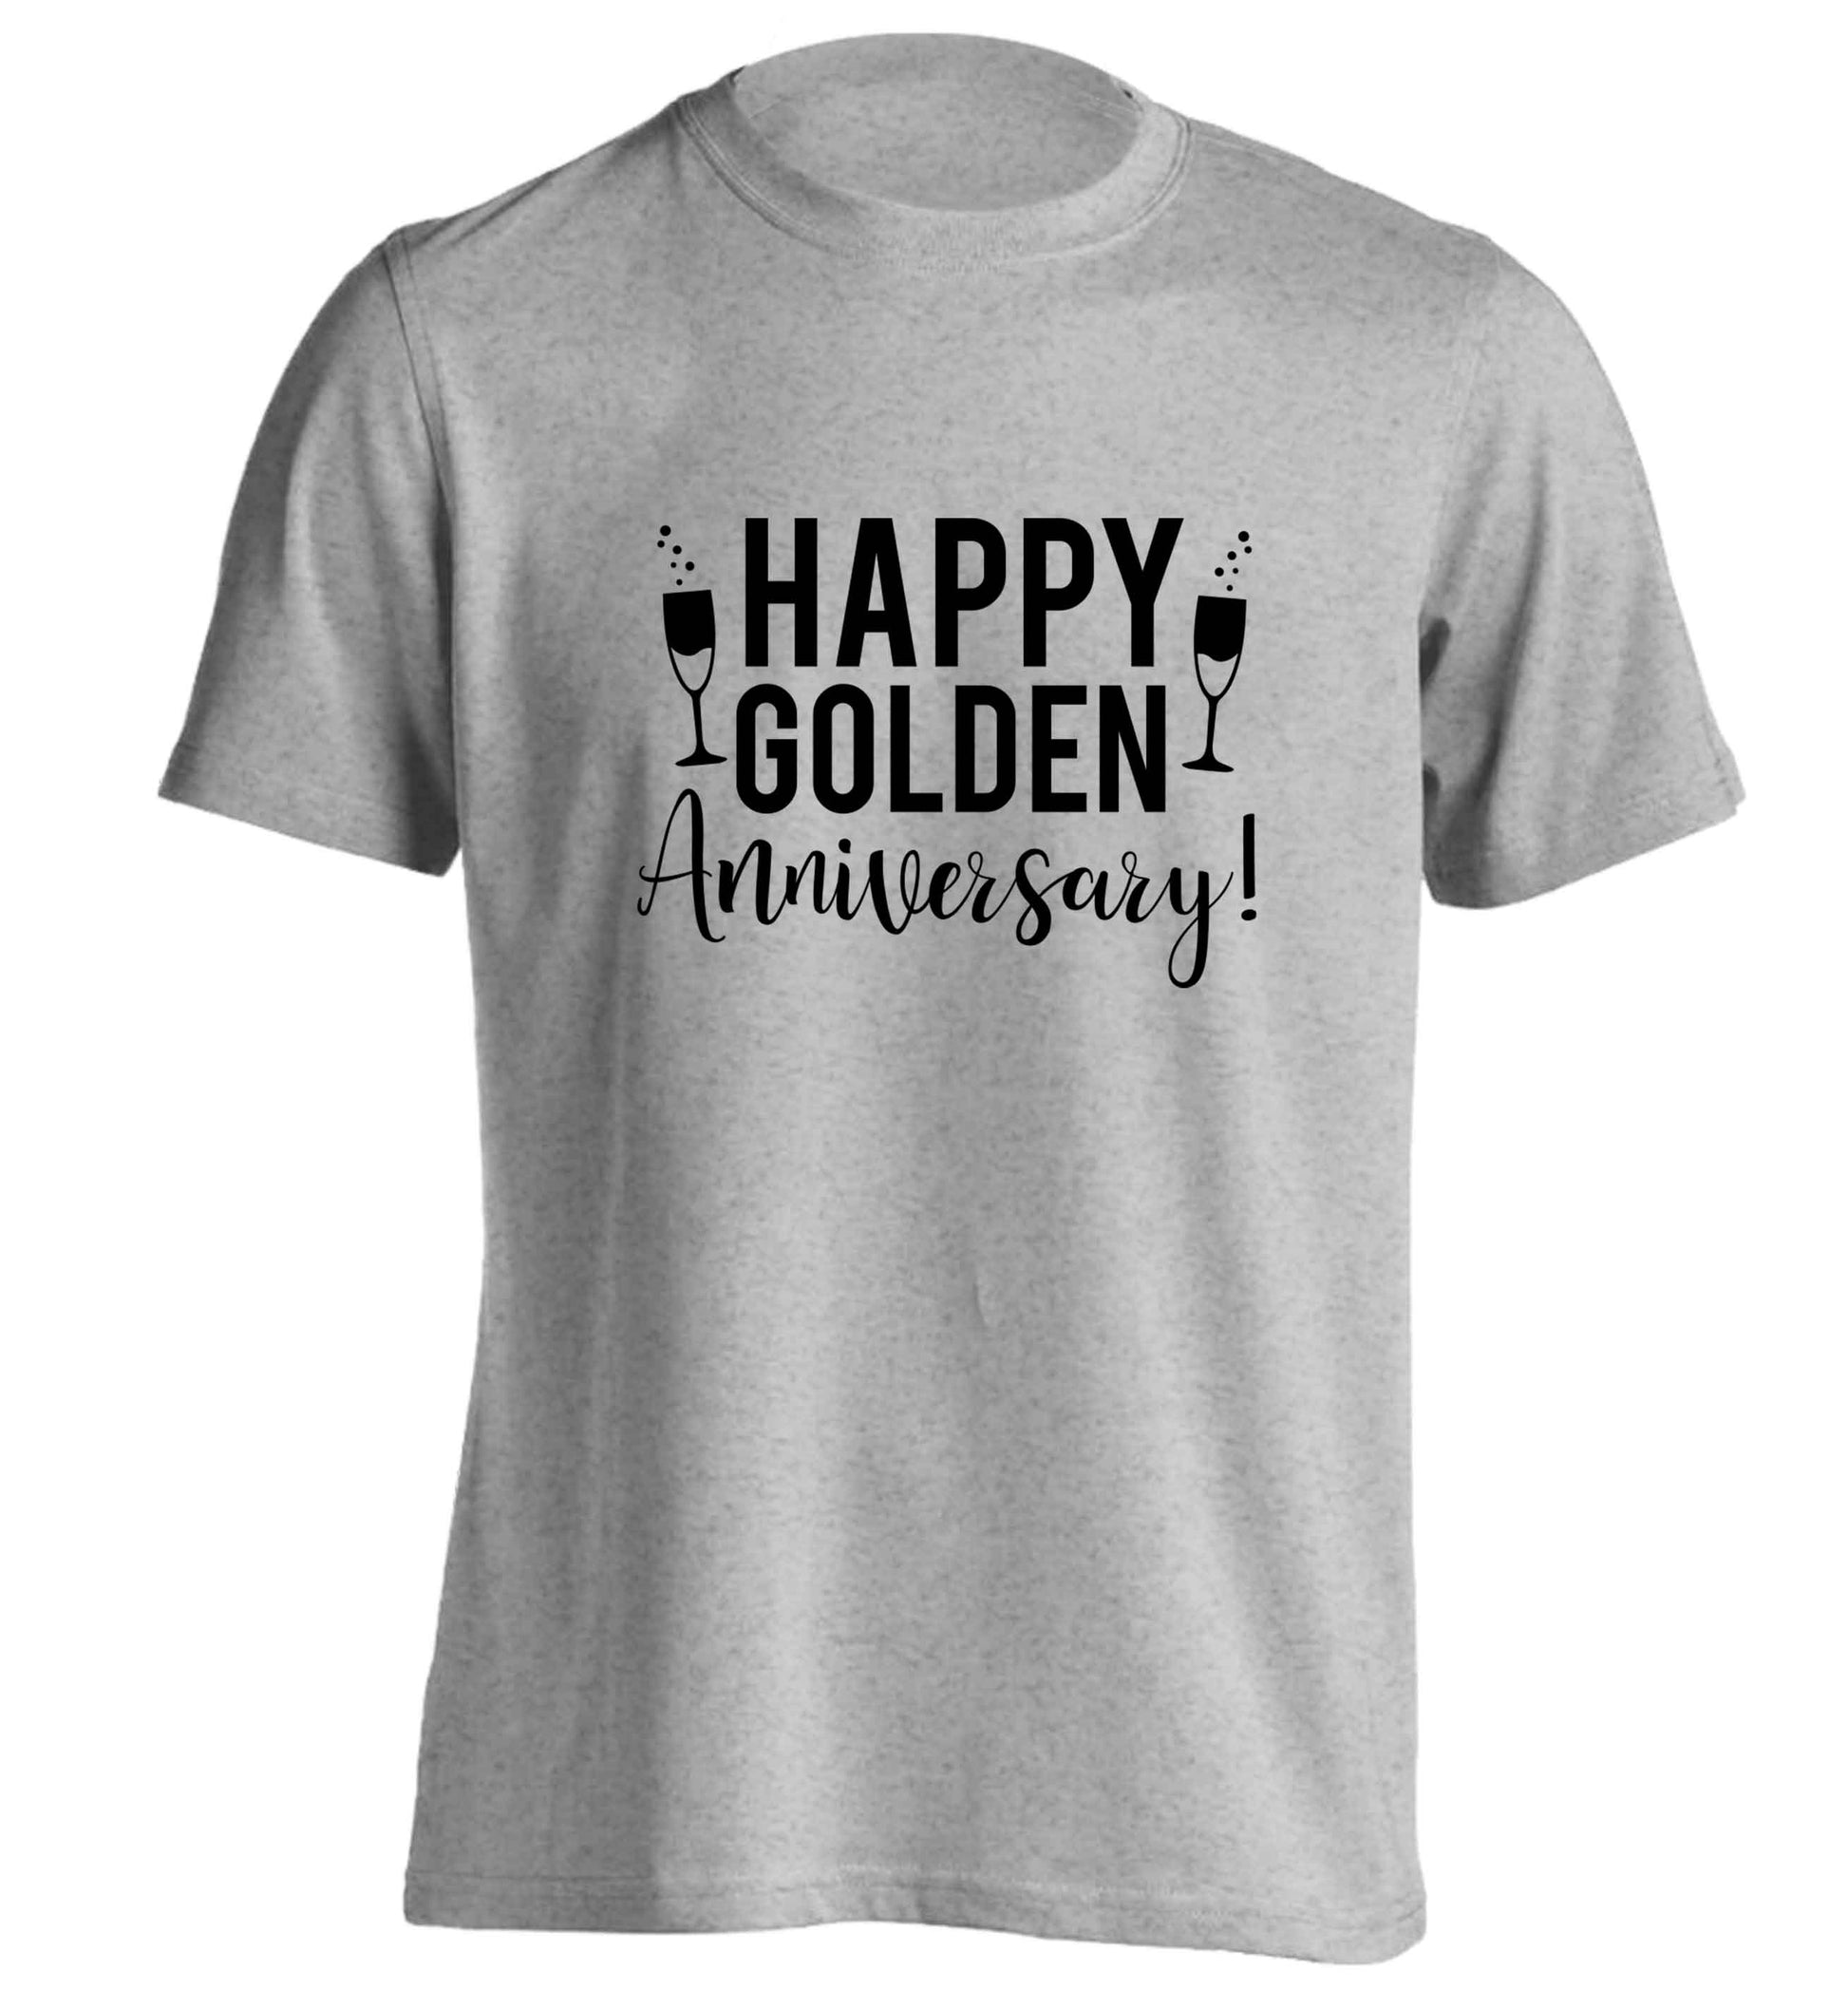 Happy golden anniversary! adults unisex grey Tshirt 2XL